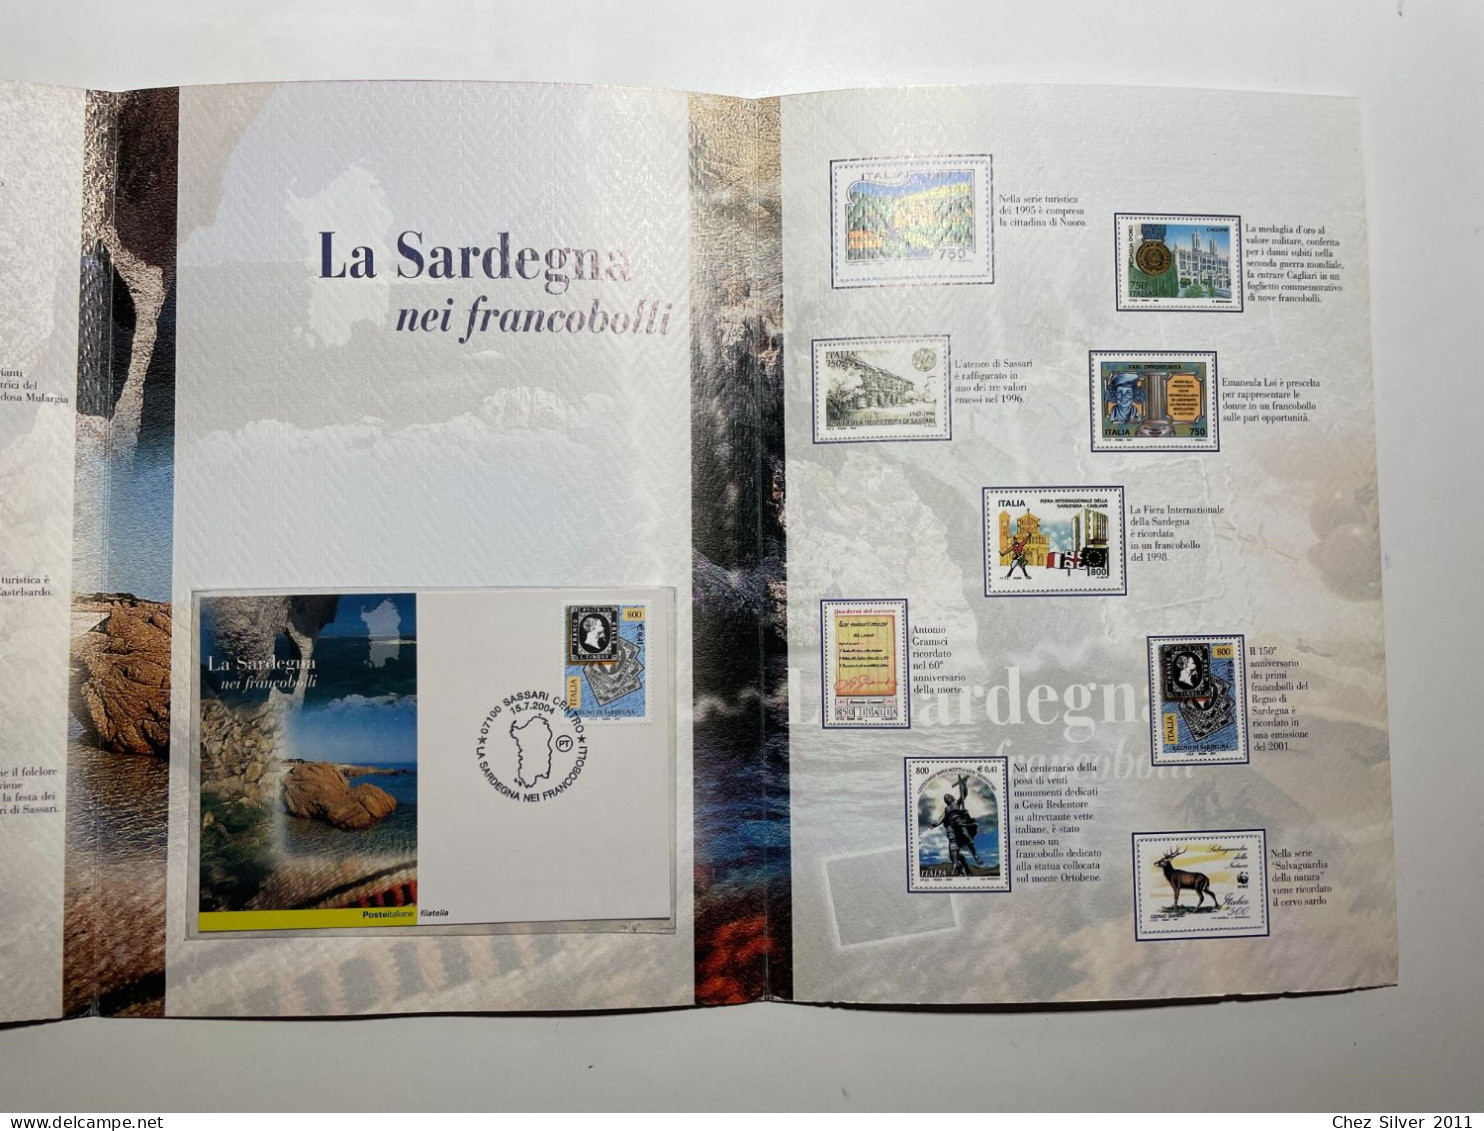 2004 Poste Italiane Filatelia Folder Filatelico La Sardegna Nei Francobolli - Folder